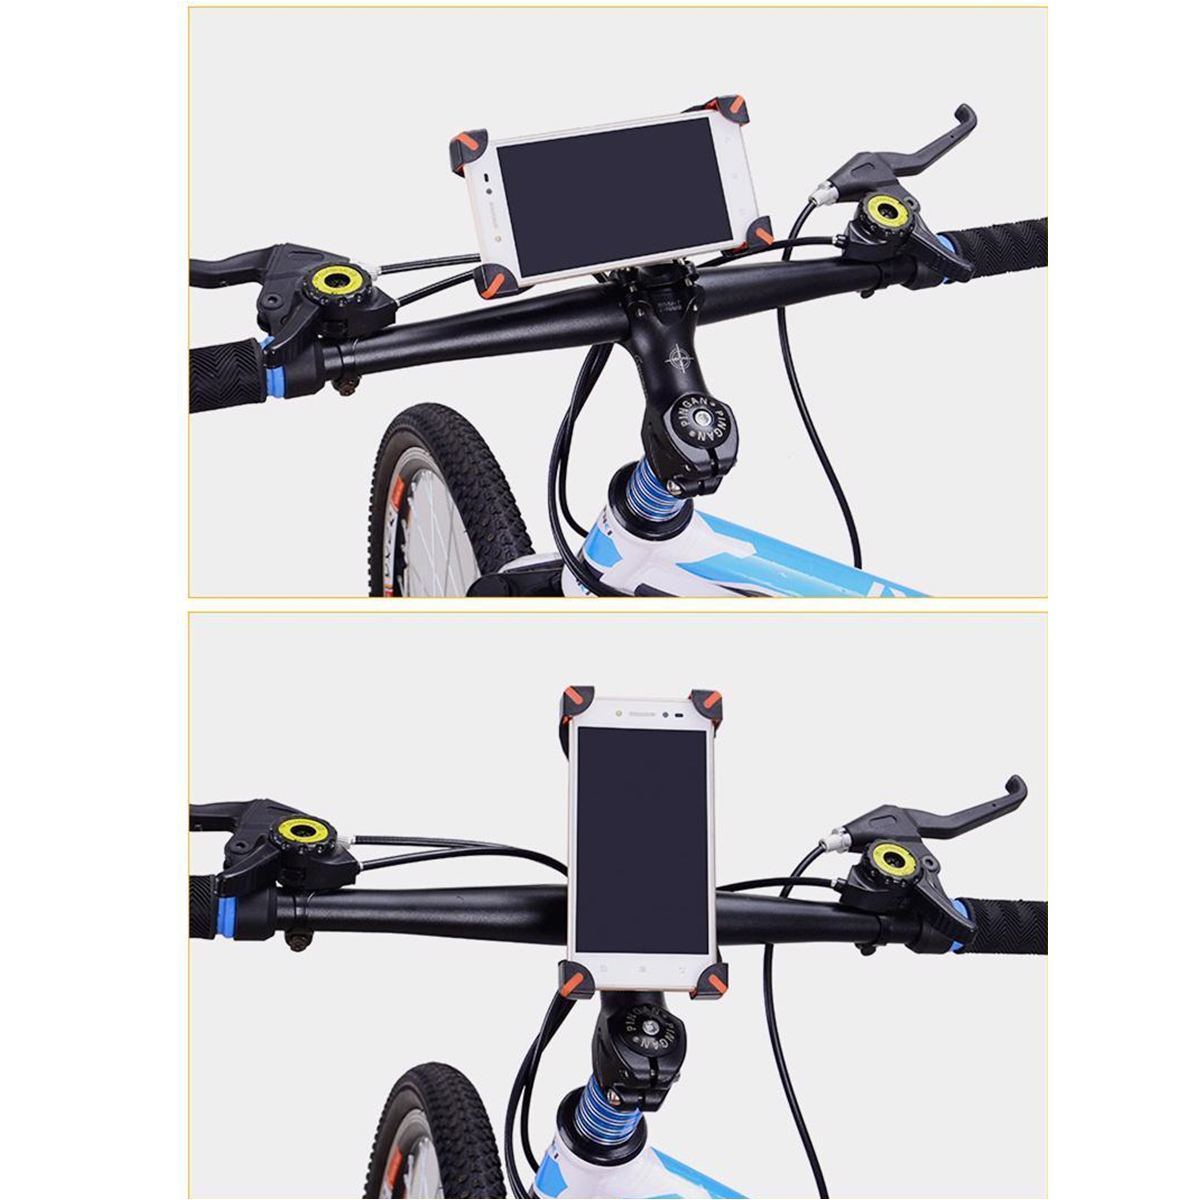 Mijia-Adjustable-Anti-Slip-Phone-Holder-Bracket-For-Mijia-M365-Scooter-E-Bike-X-Type-1633417-2